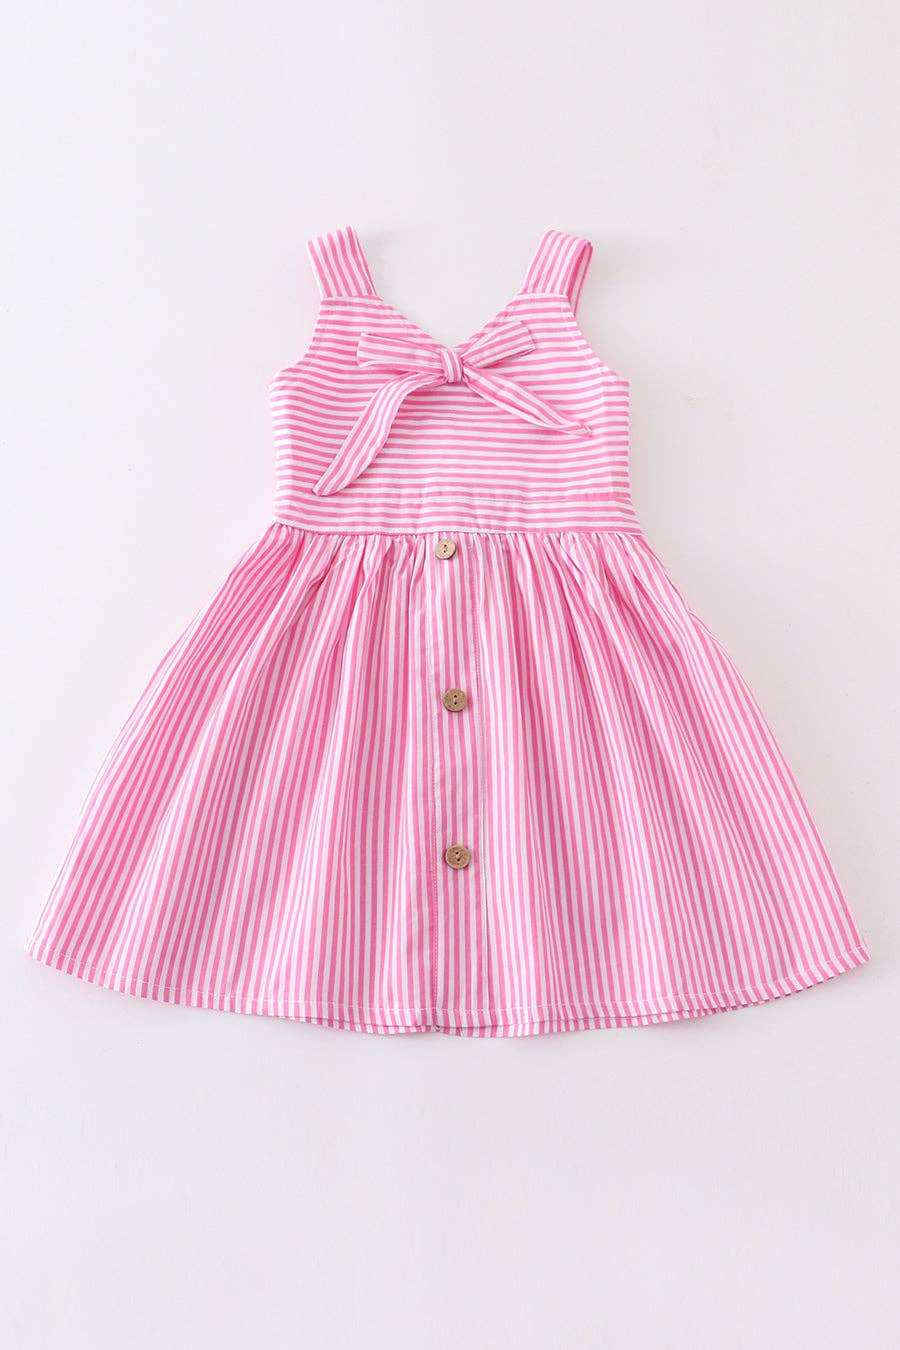 Striped pink dress